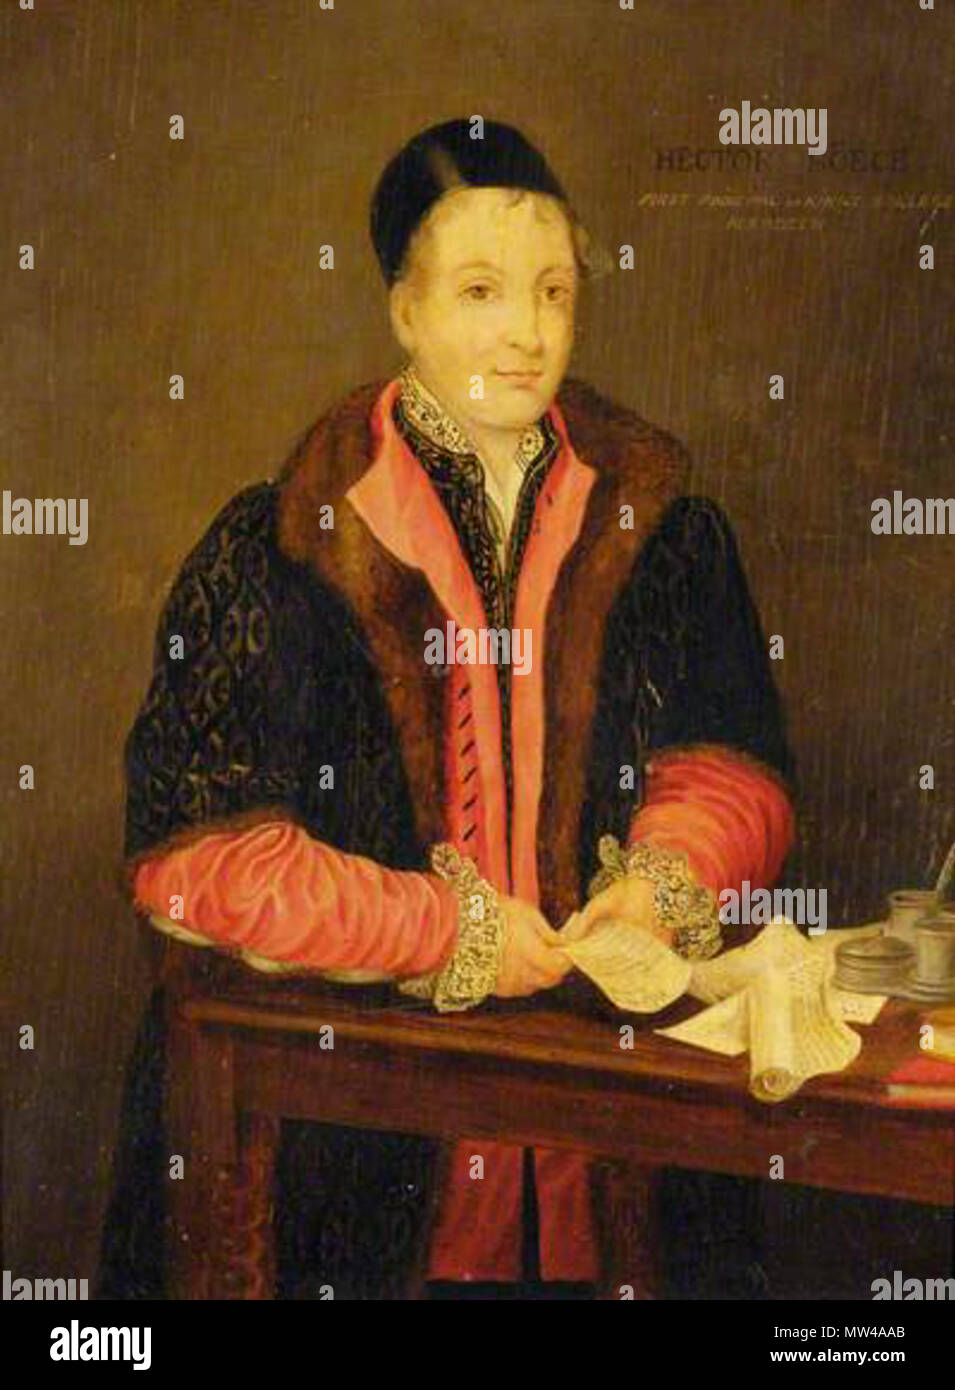 . Hector Boece (1465-1536) . Contemporary portrait. Artist unknown 269 HectorBoece Stock Photo